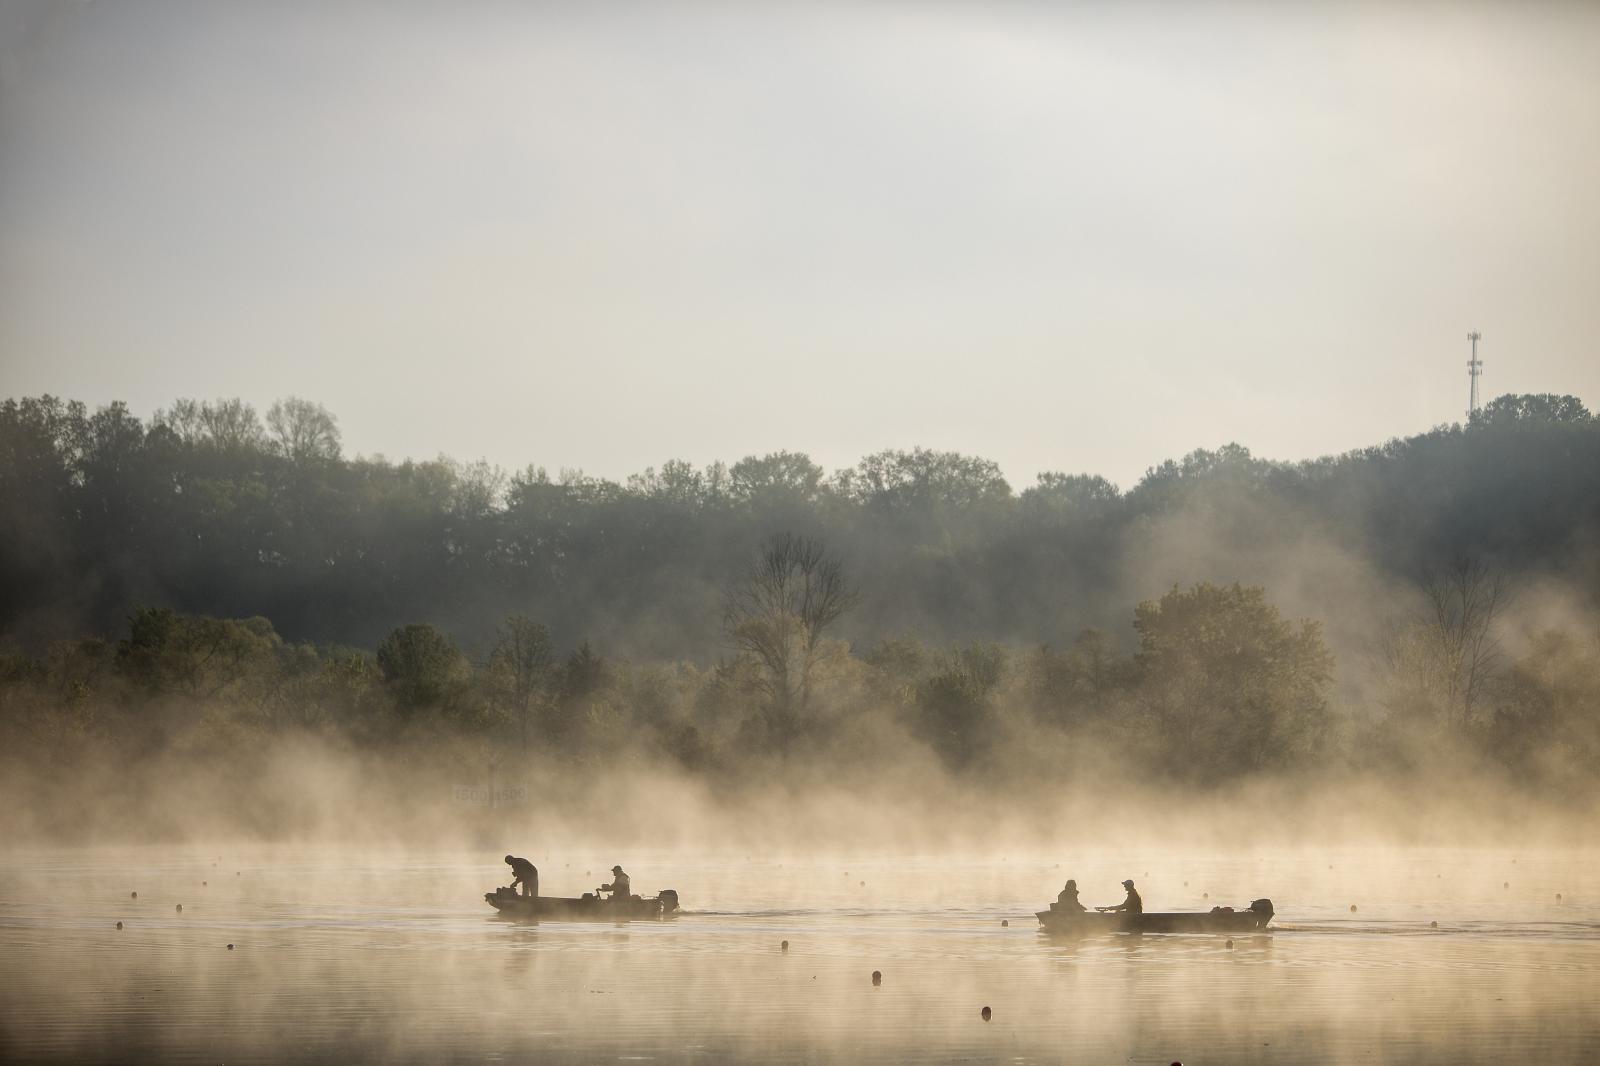 Foggy Morning Fishing | Buy this image